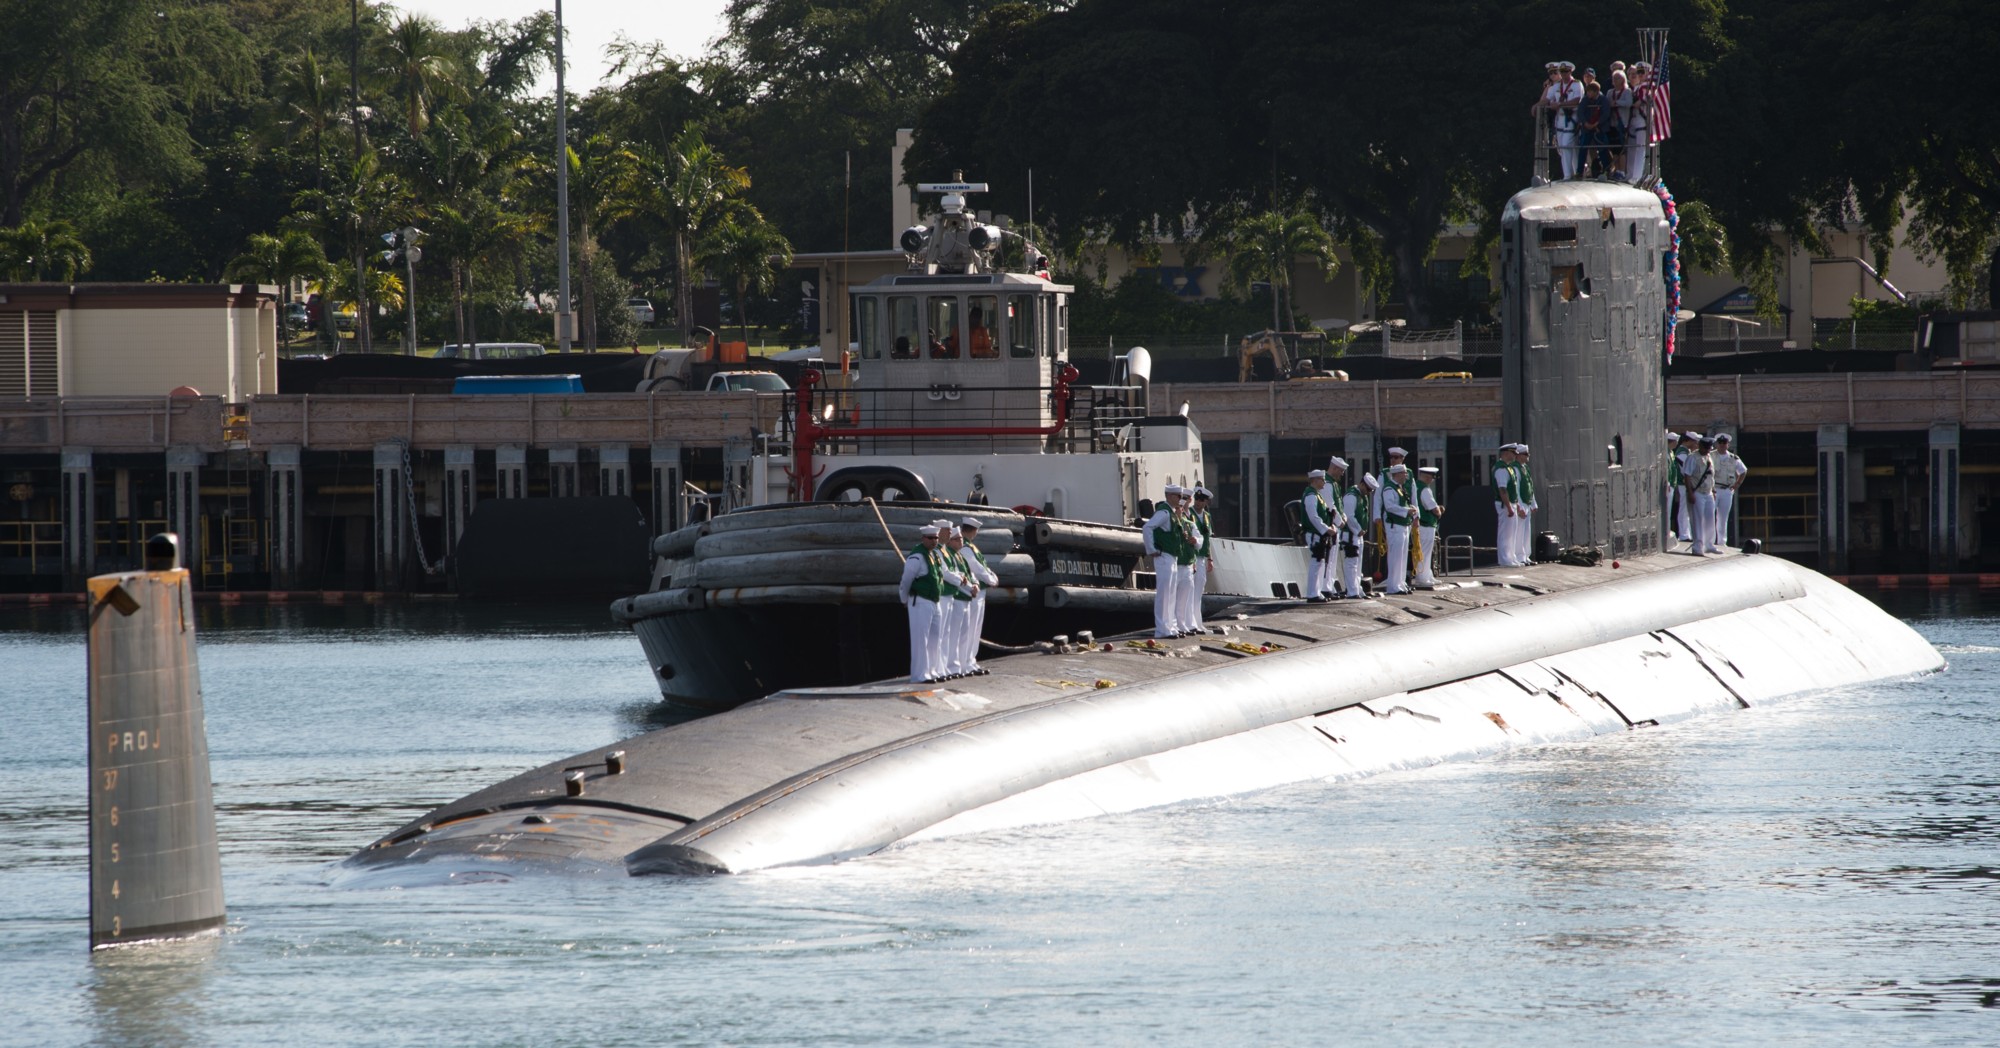 ssn-780 uss missouri virginia class attack submarine us navy 45 joint base pearl harbor hickam hawaii